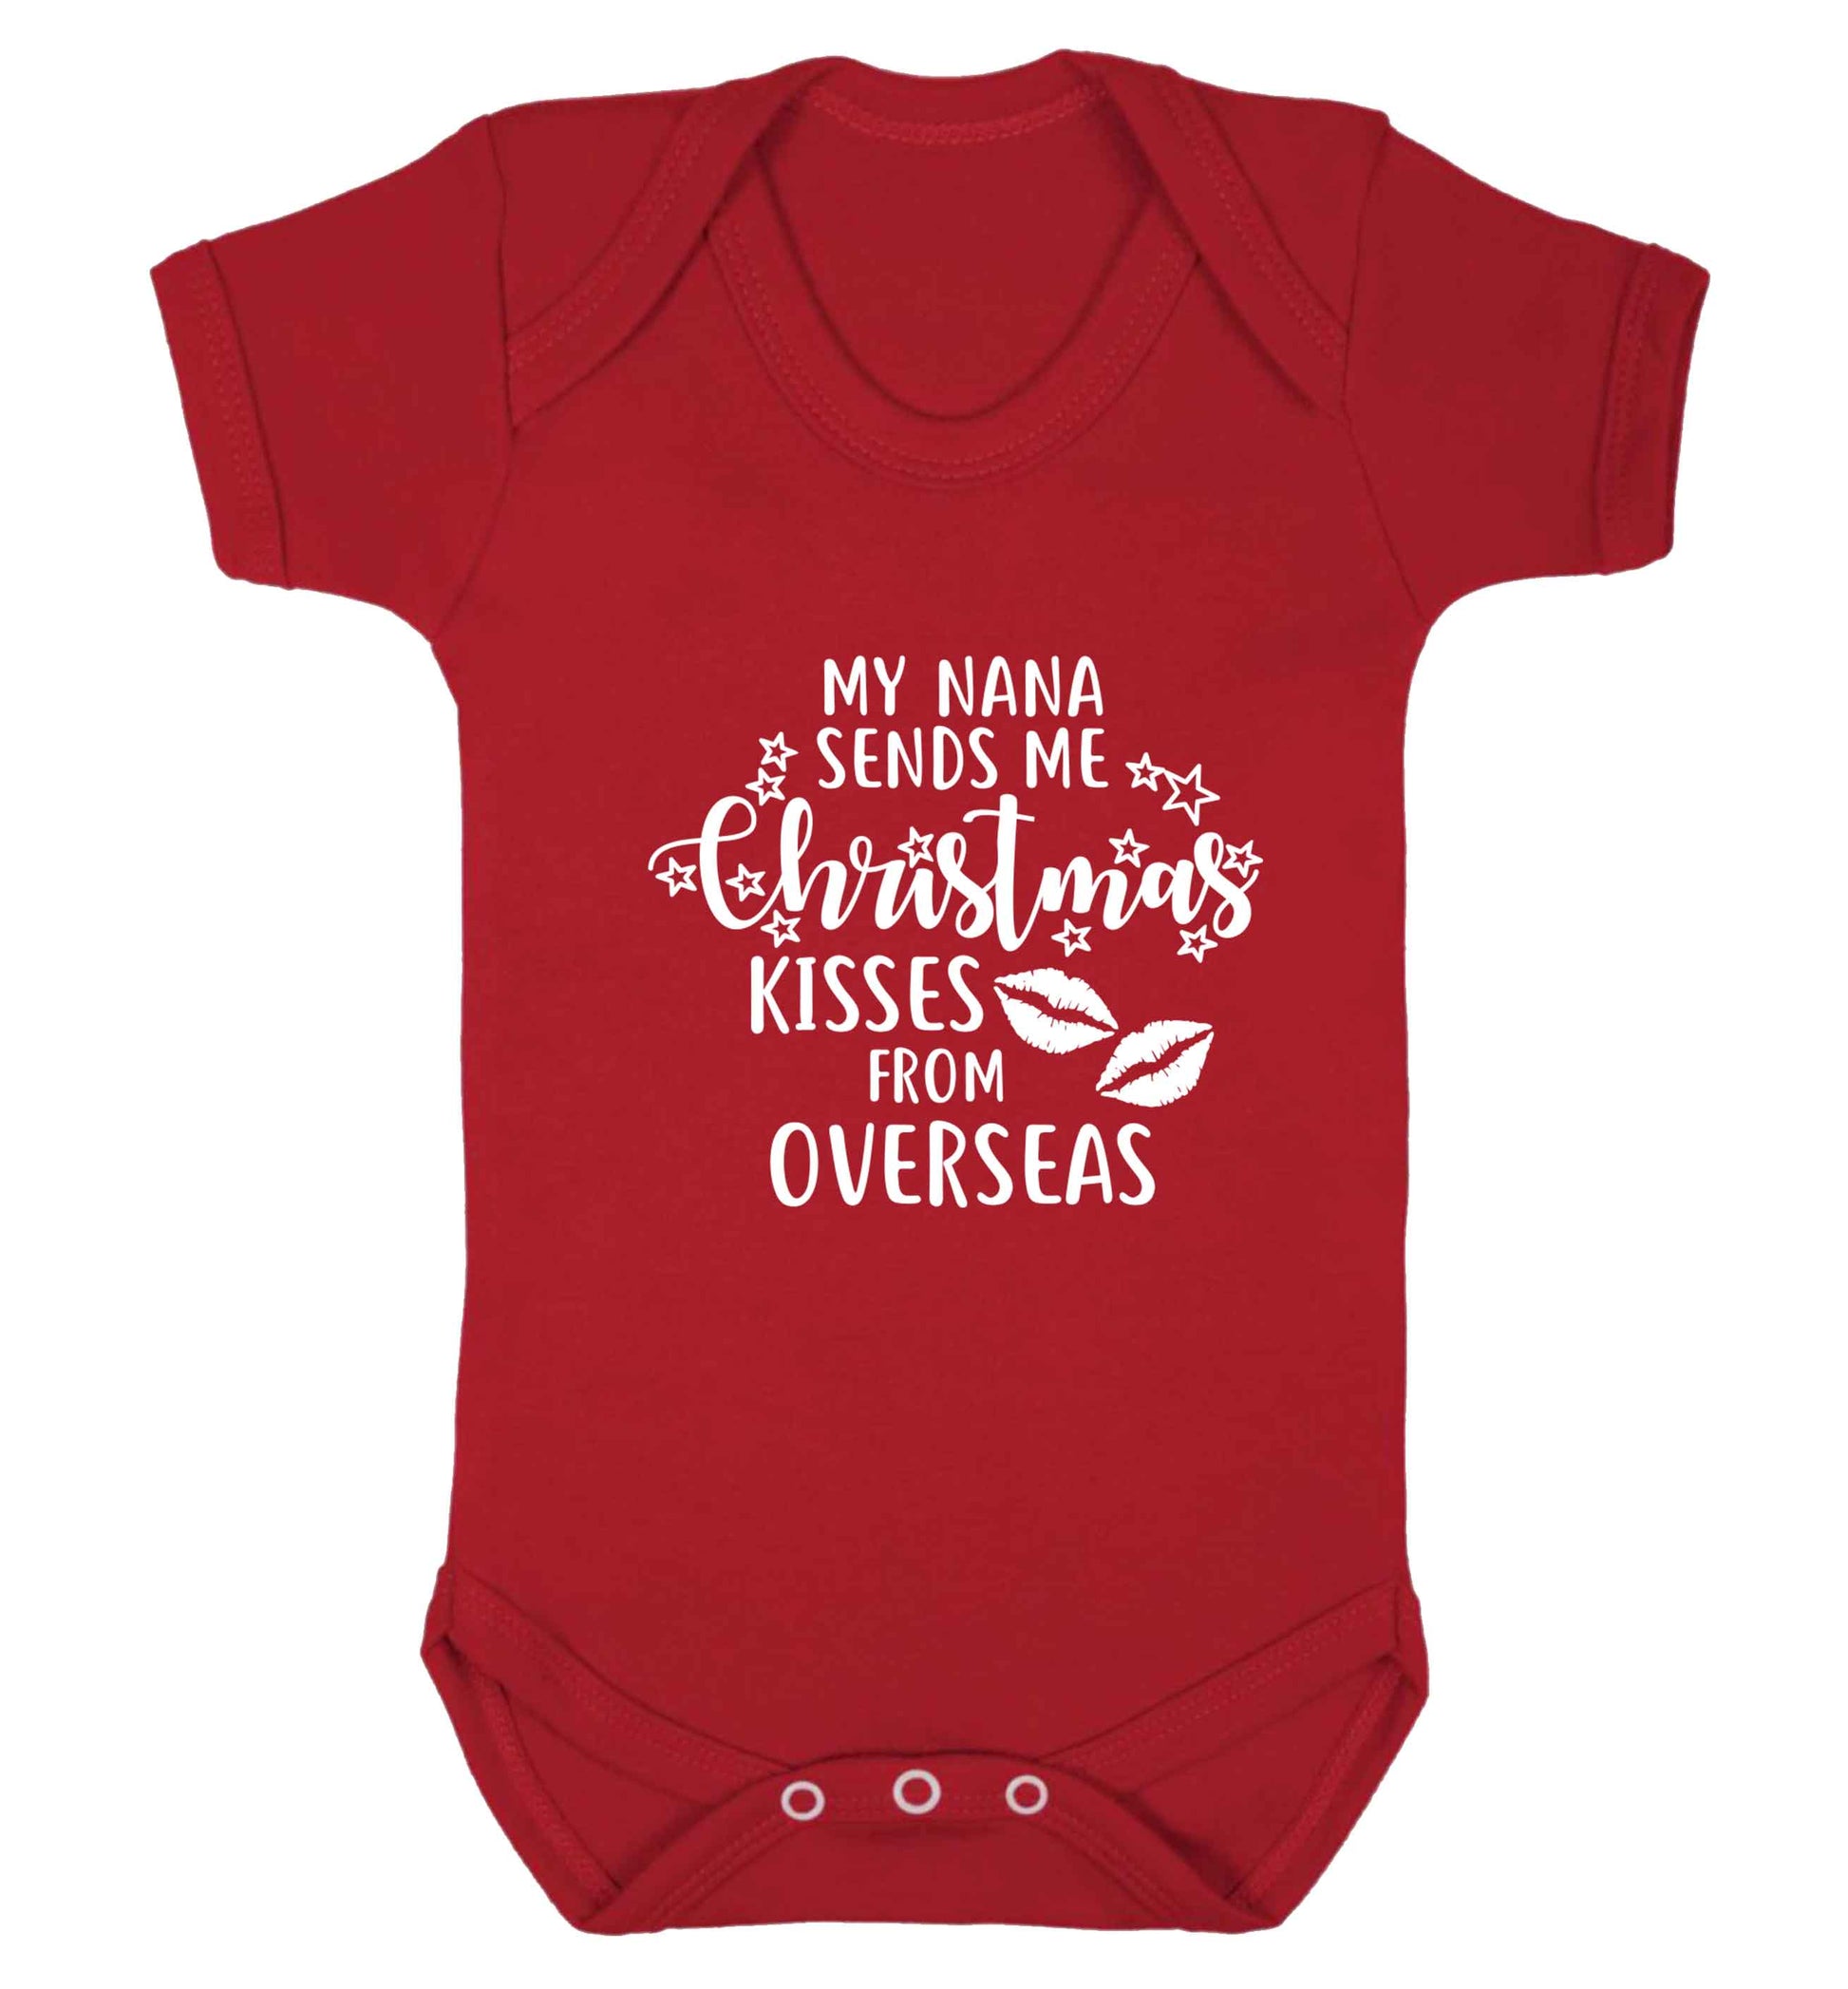 Grandma Christmas Kisses Overseas baby vest red 18-24 months